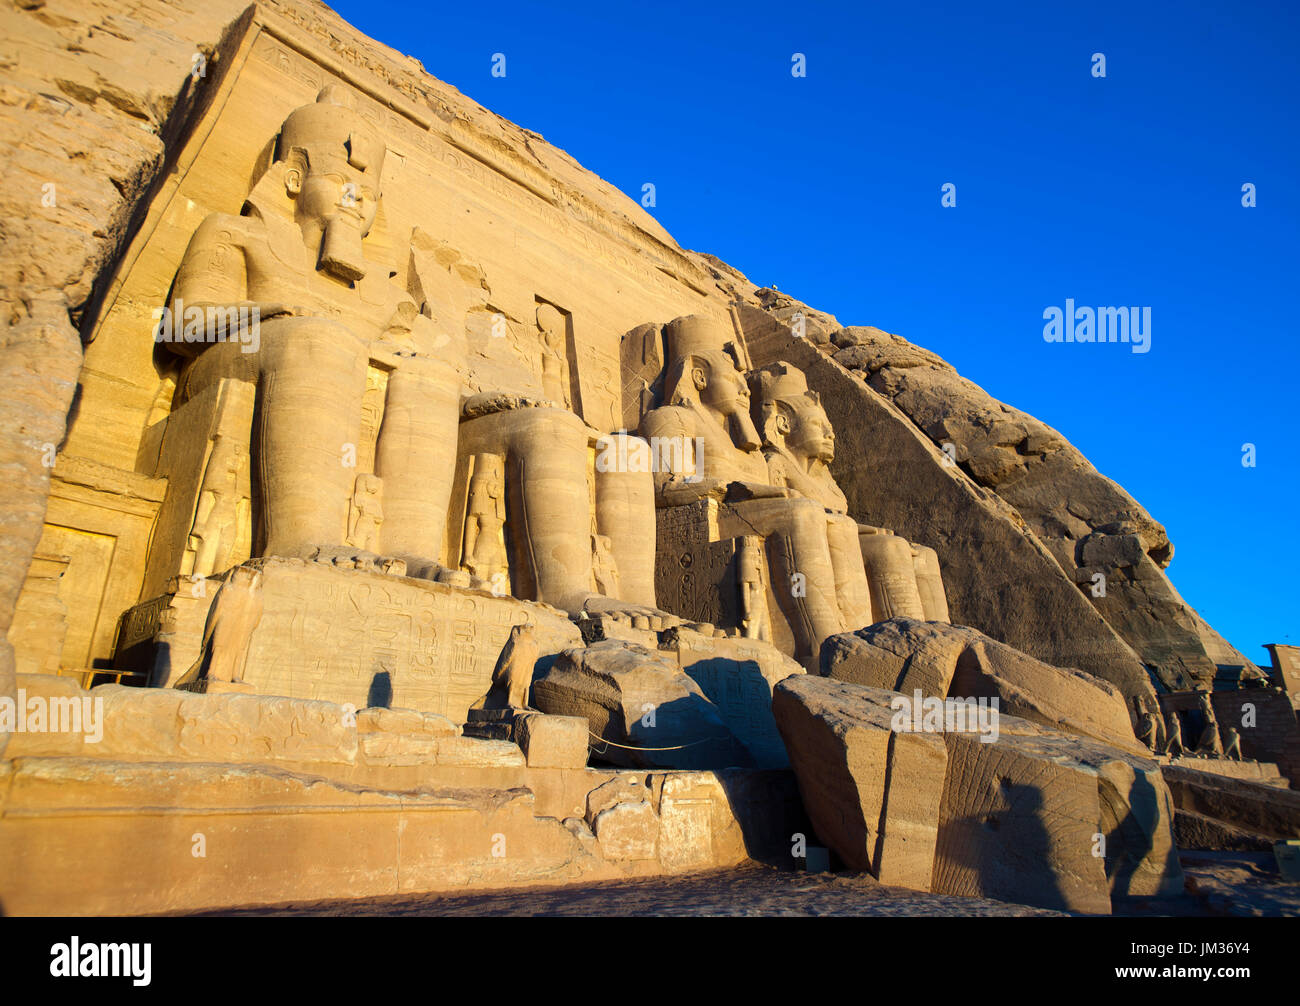 Aegypten, Abu Simbel, Kolossalstatuen vor dem Tempel von Ramses II. Stock Photo